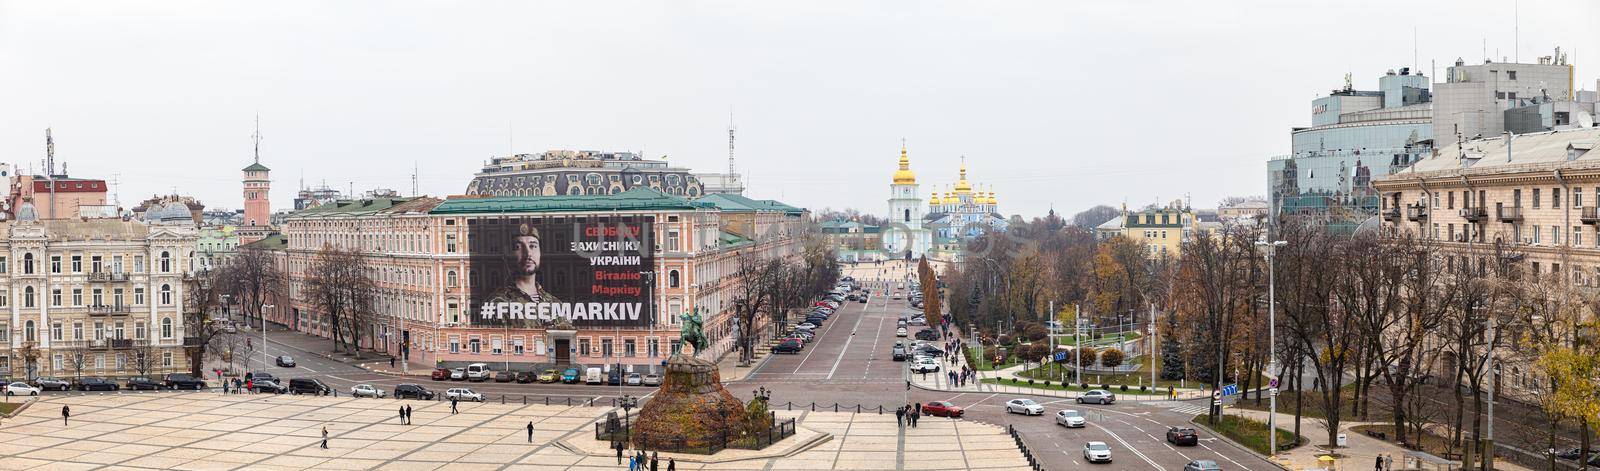 Sofievskaya square in central Kyiv by palinchak